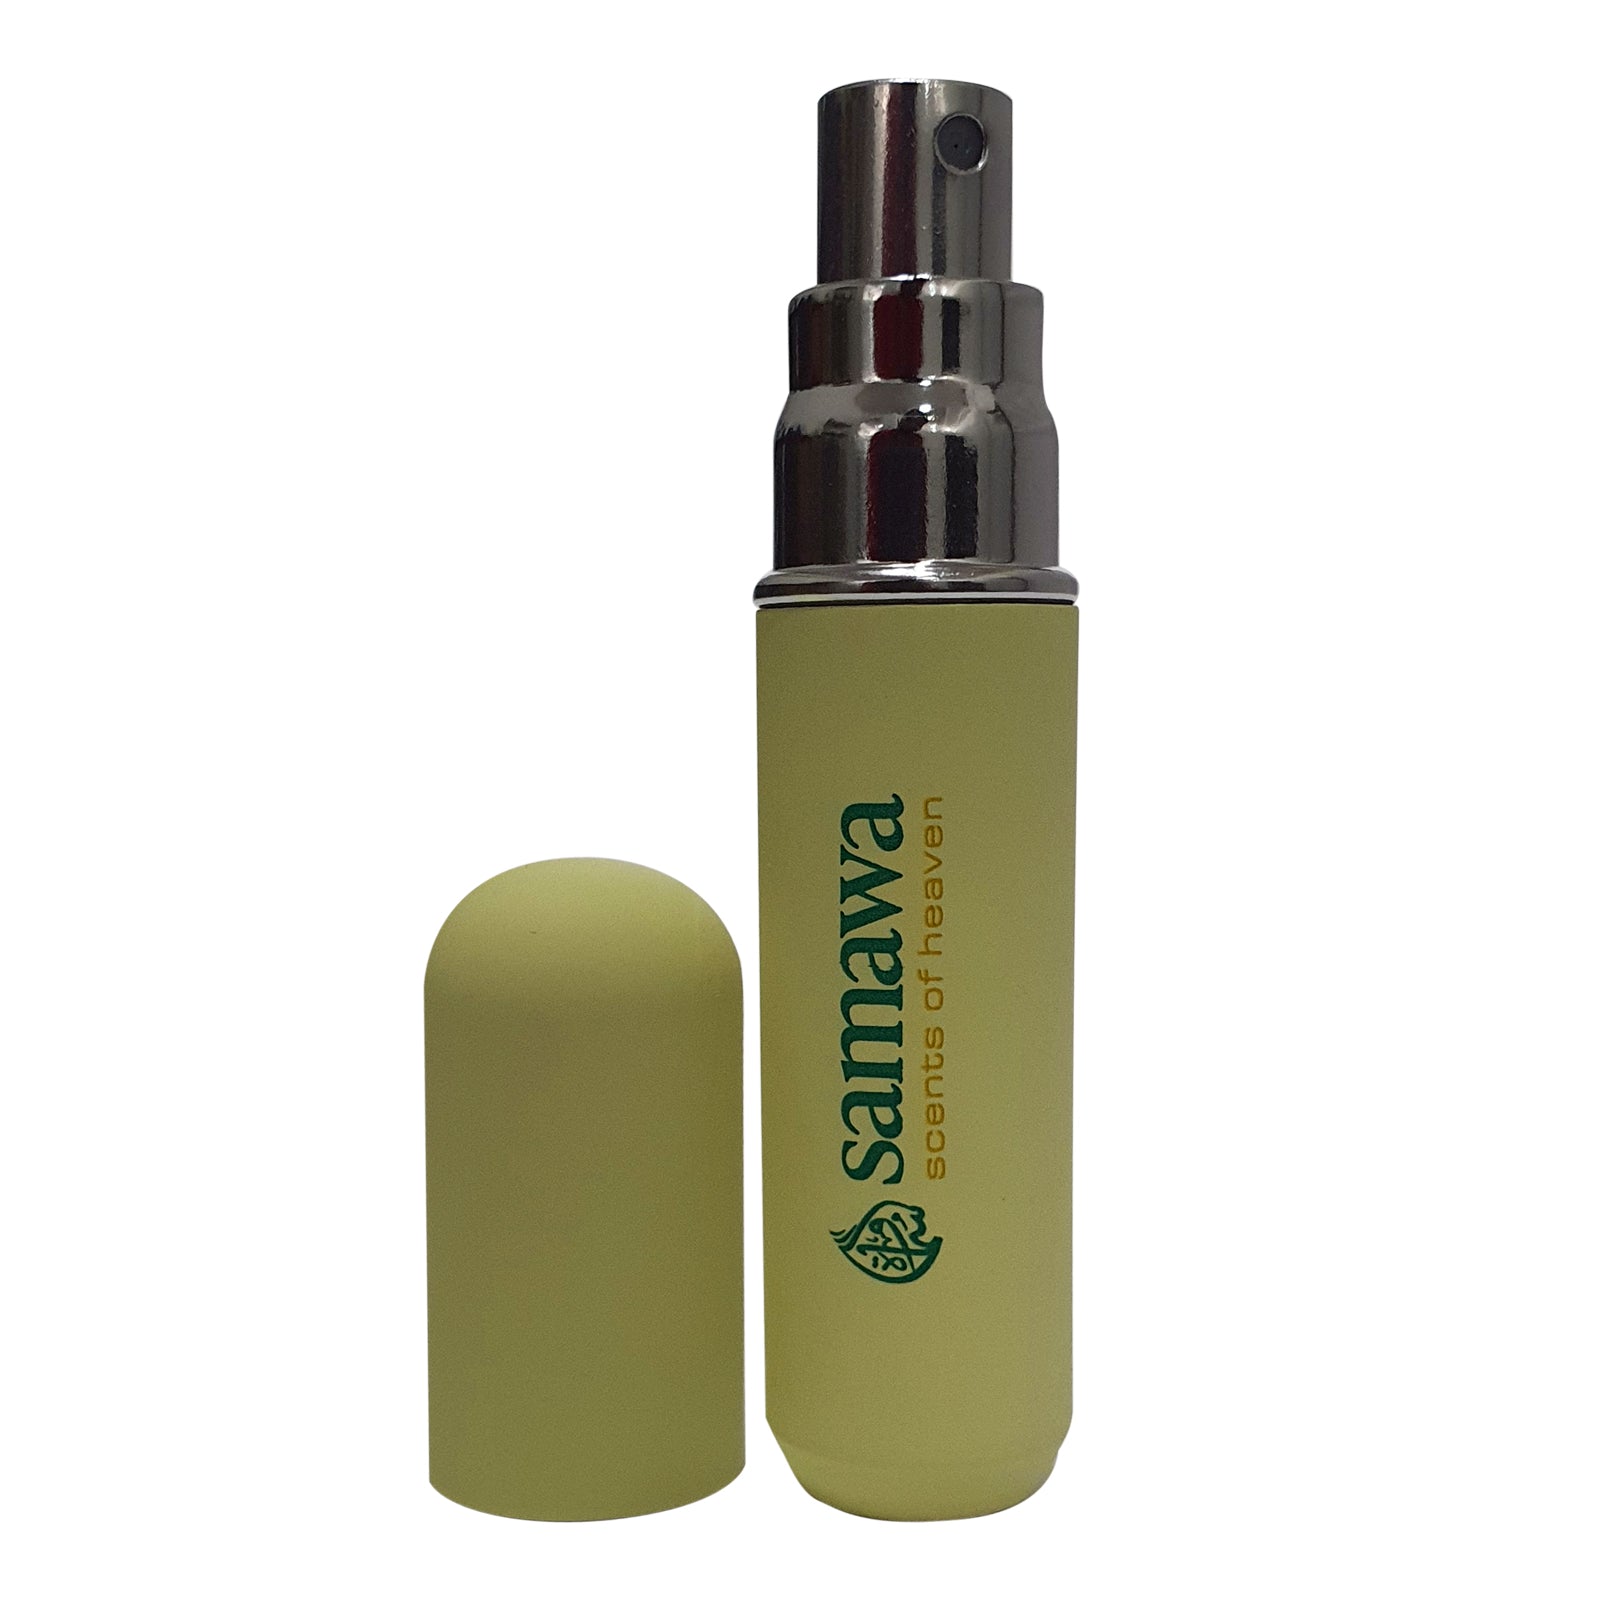 Samawa Refillable Travel Perfume Atomizer 5ml